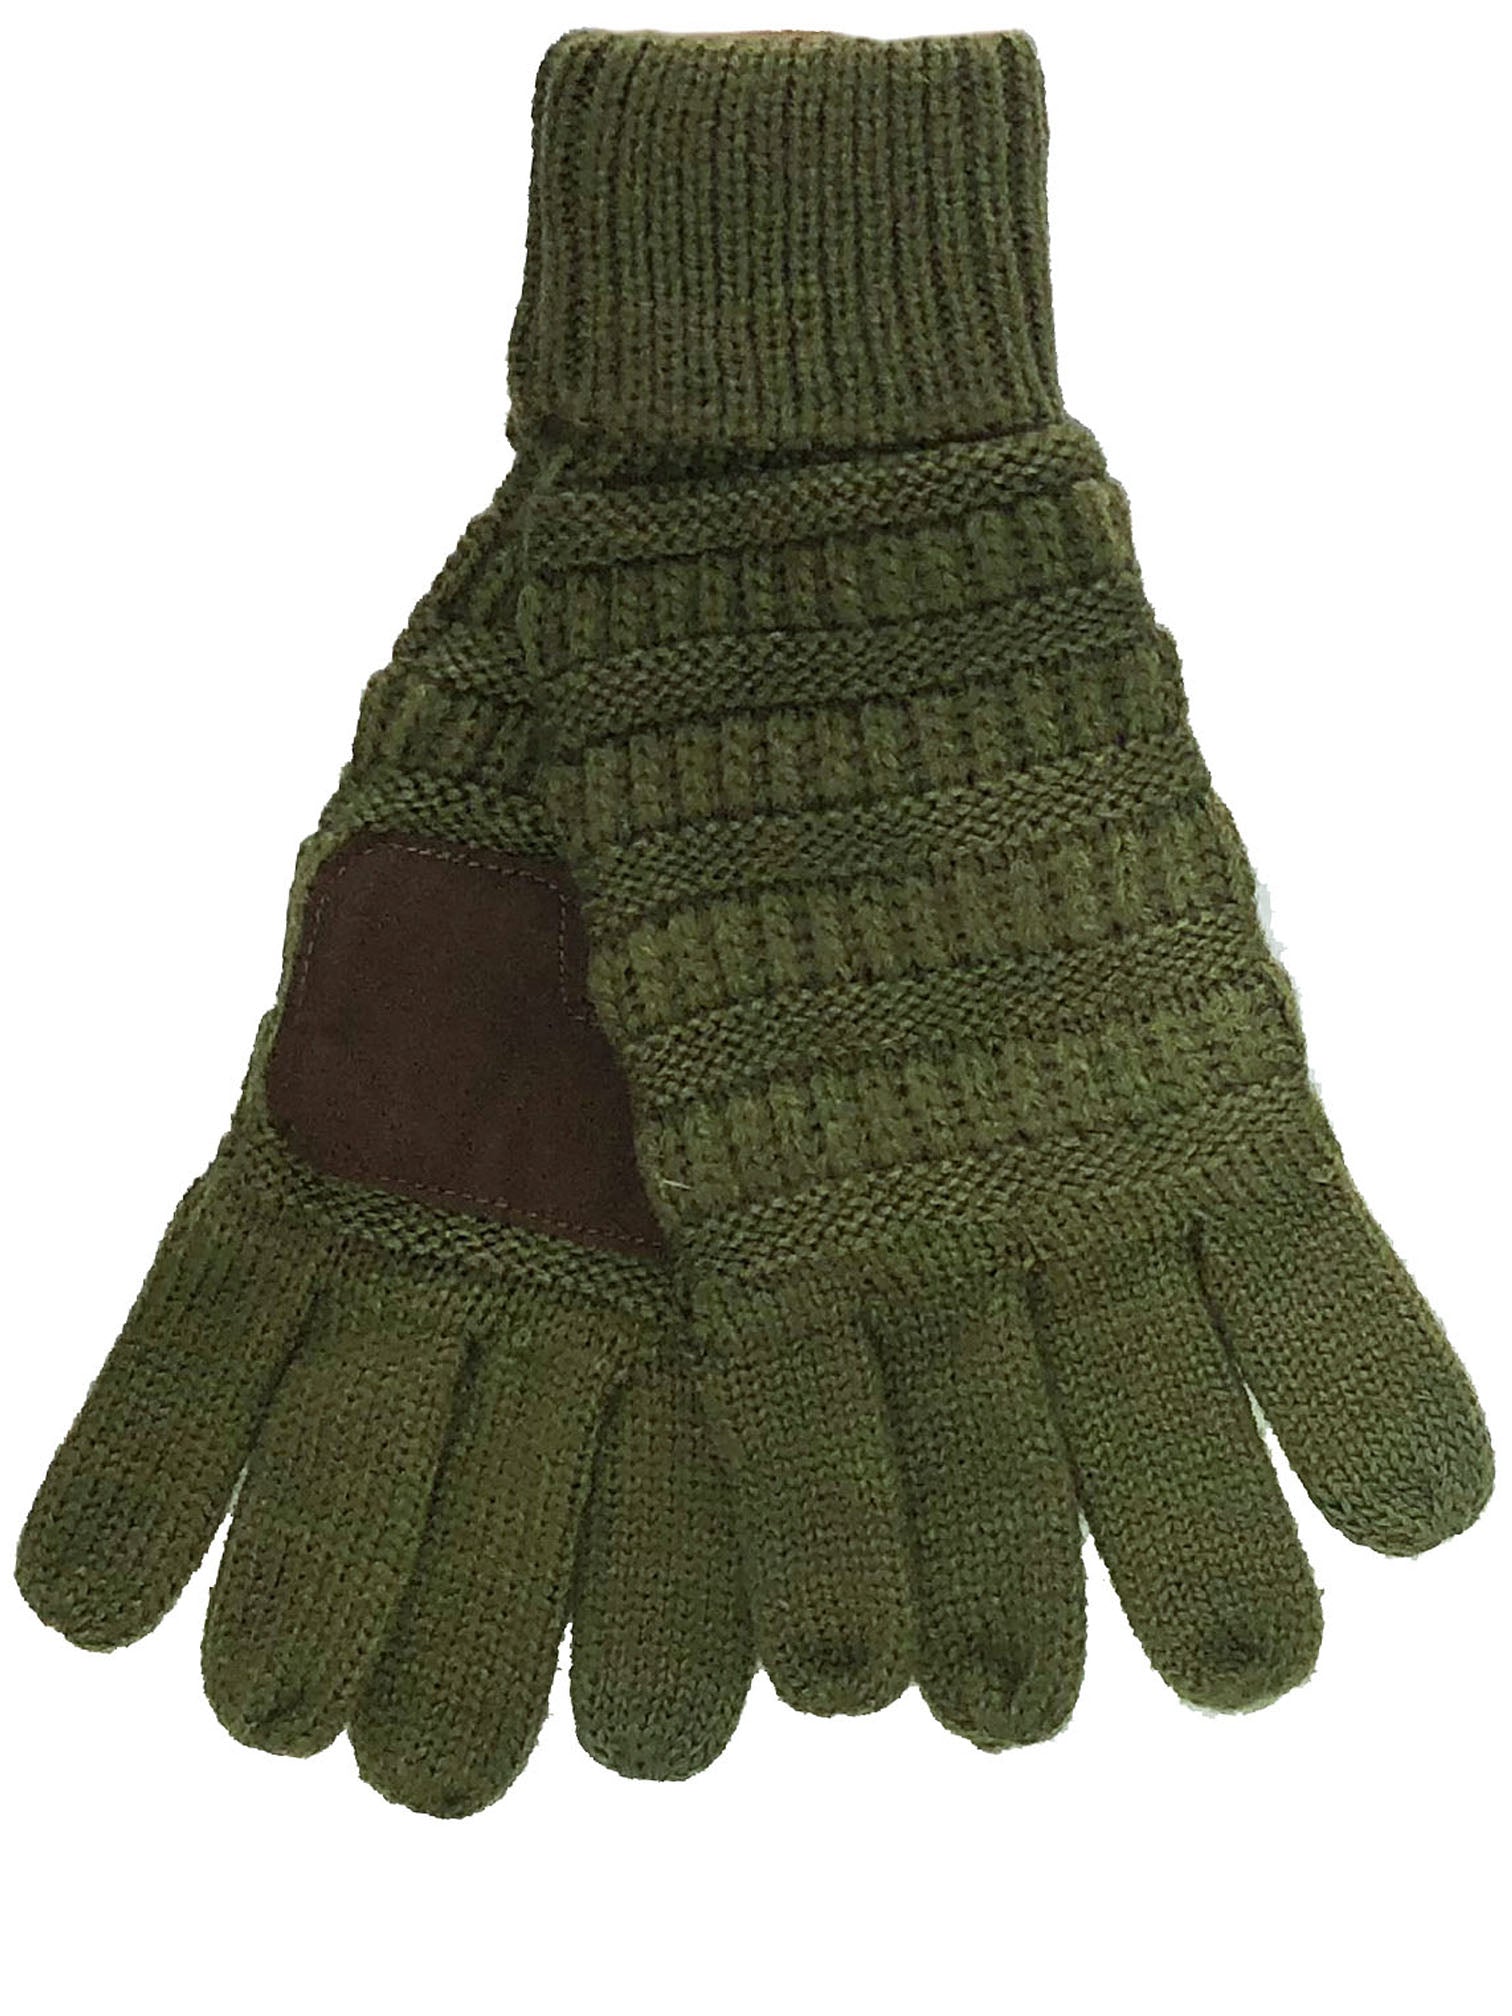 G-20 C.C Olive Gloves